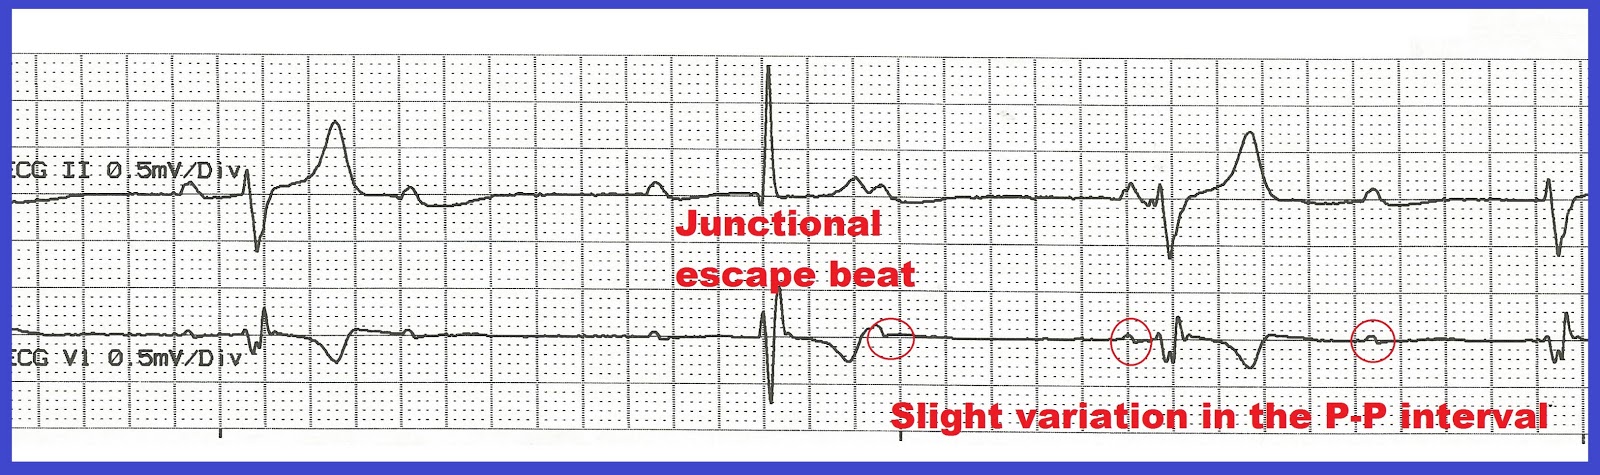 Practice EKG Rhythm Strips 168